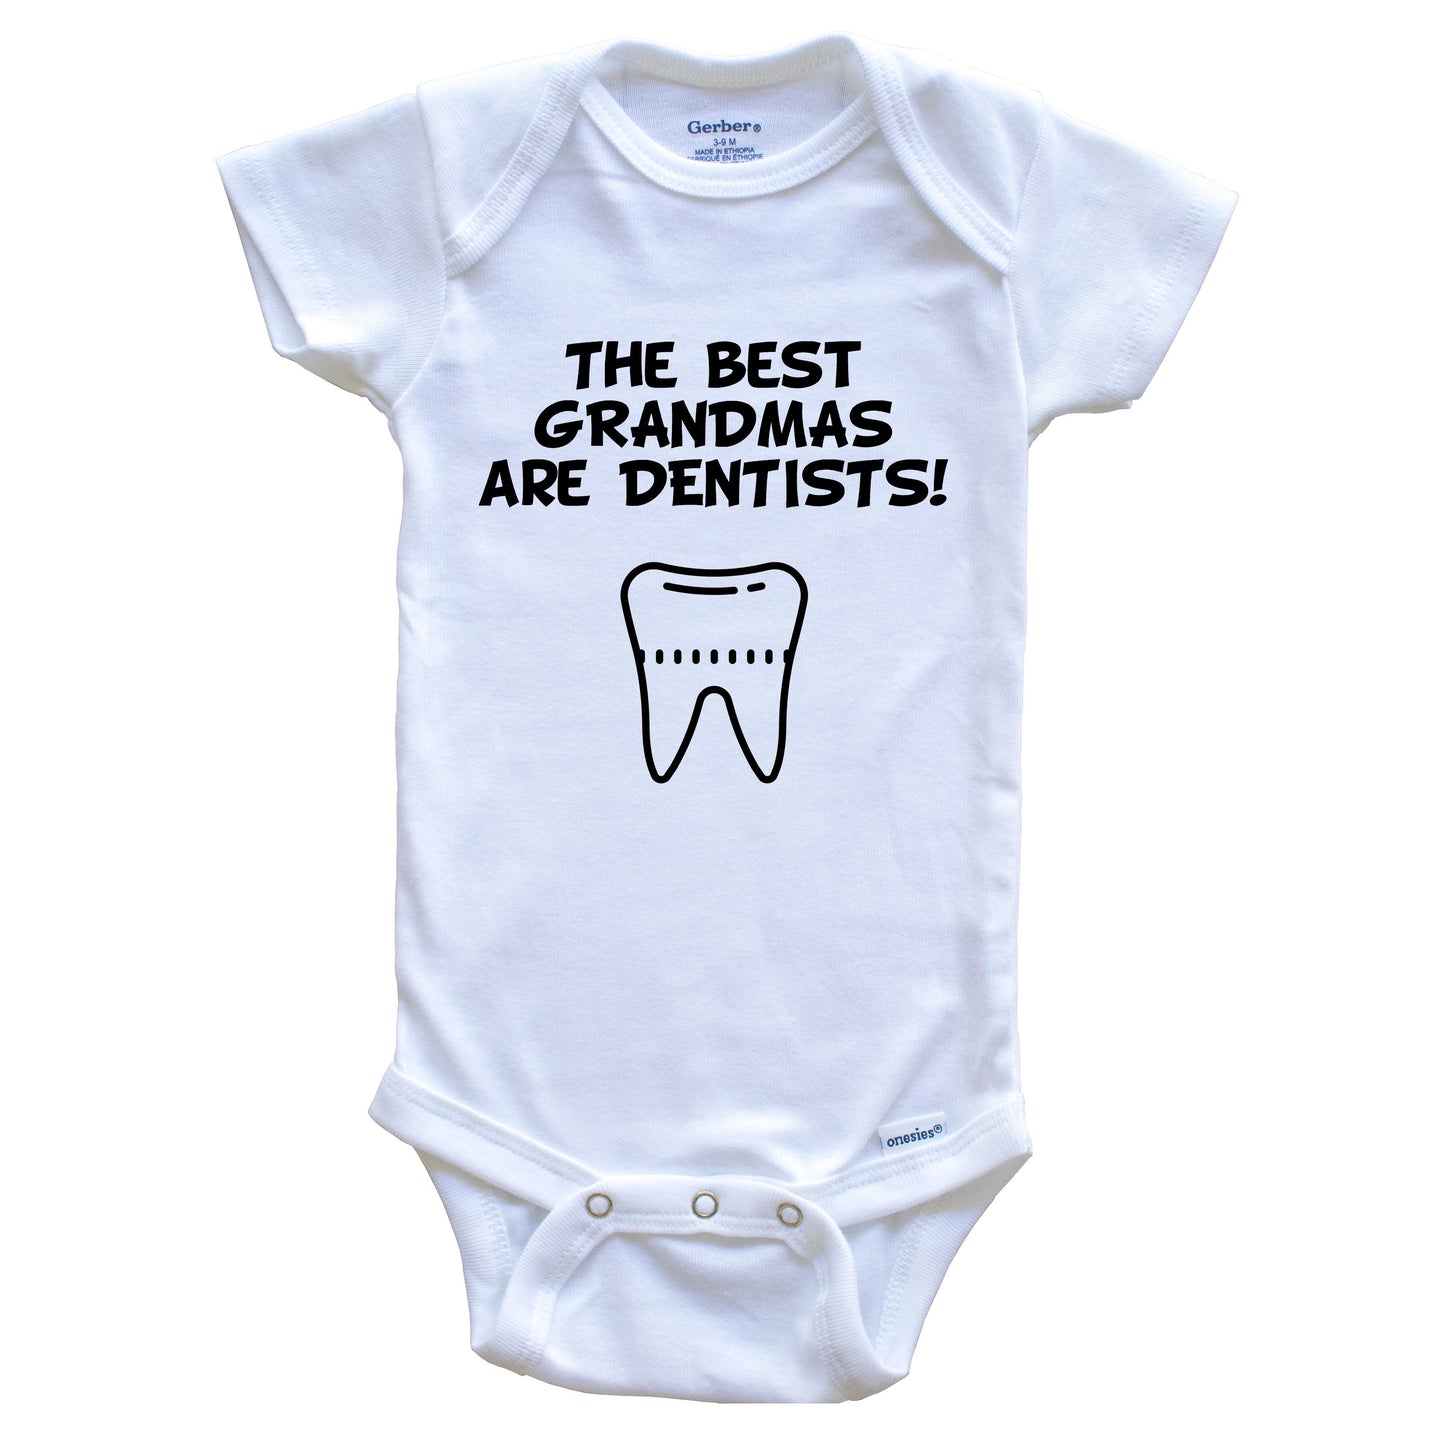 The Best Grandmas Are Dentists Funny Grandchild Baby Onesie